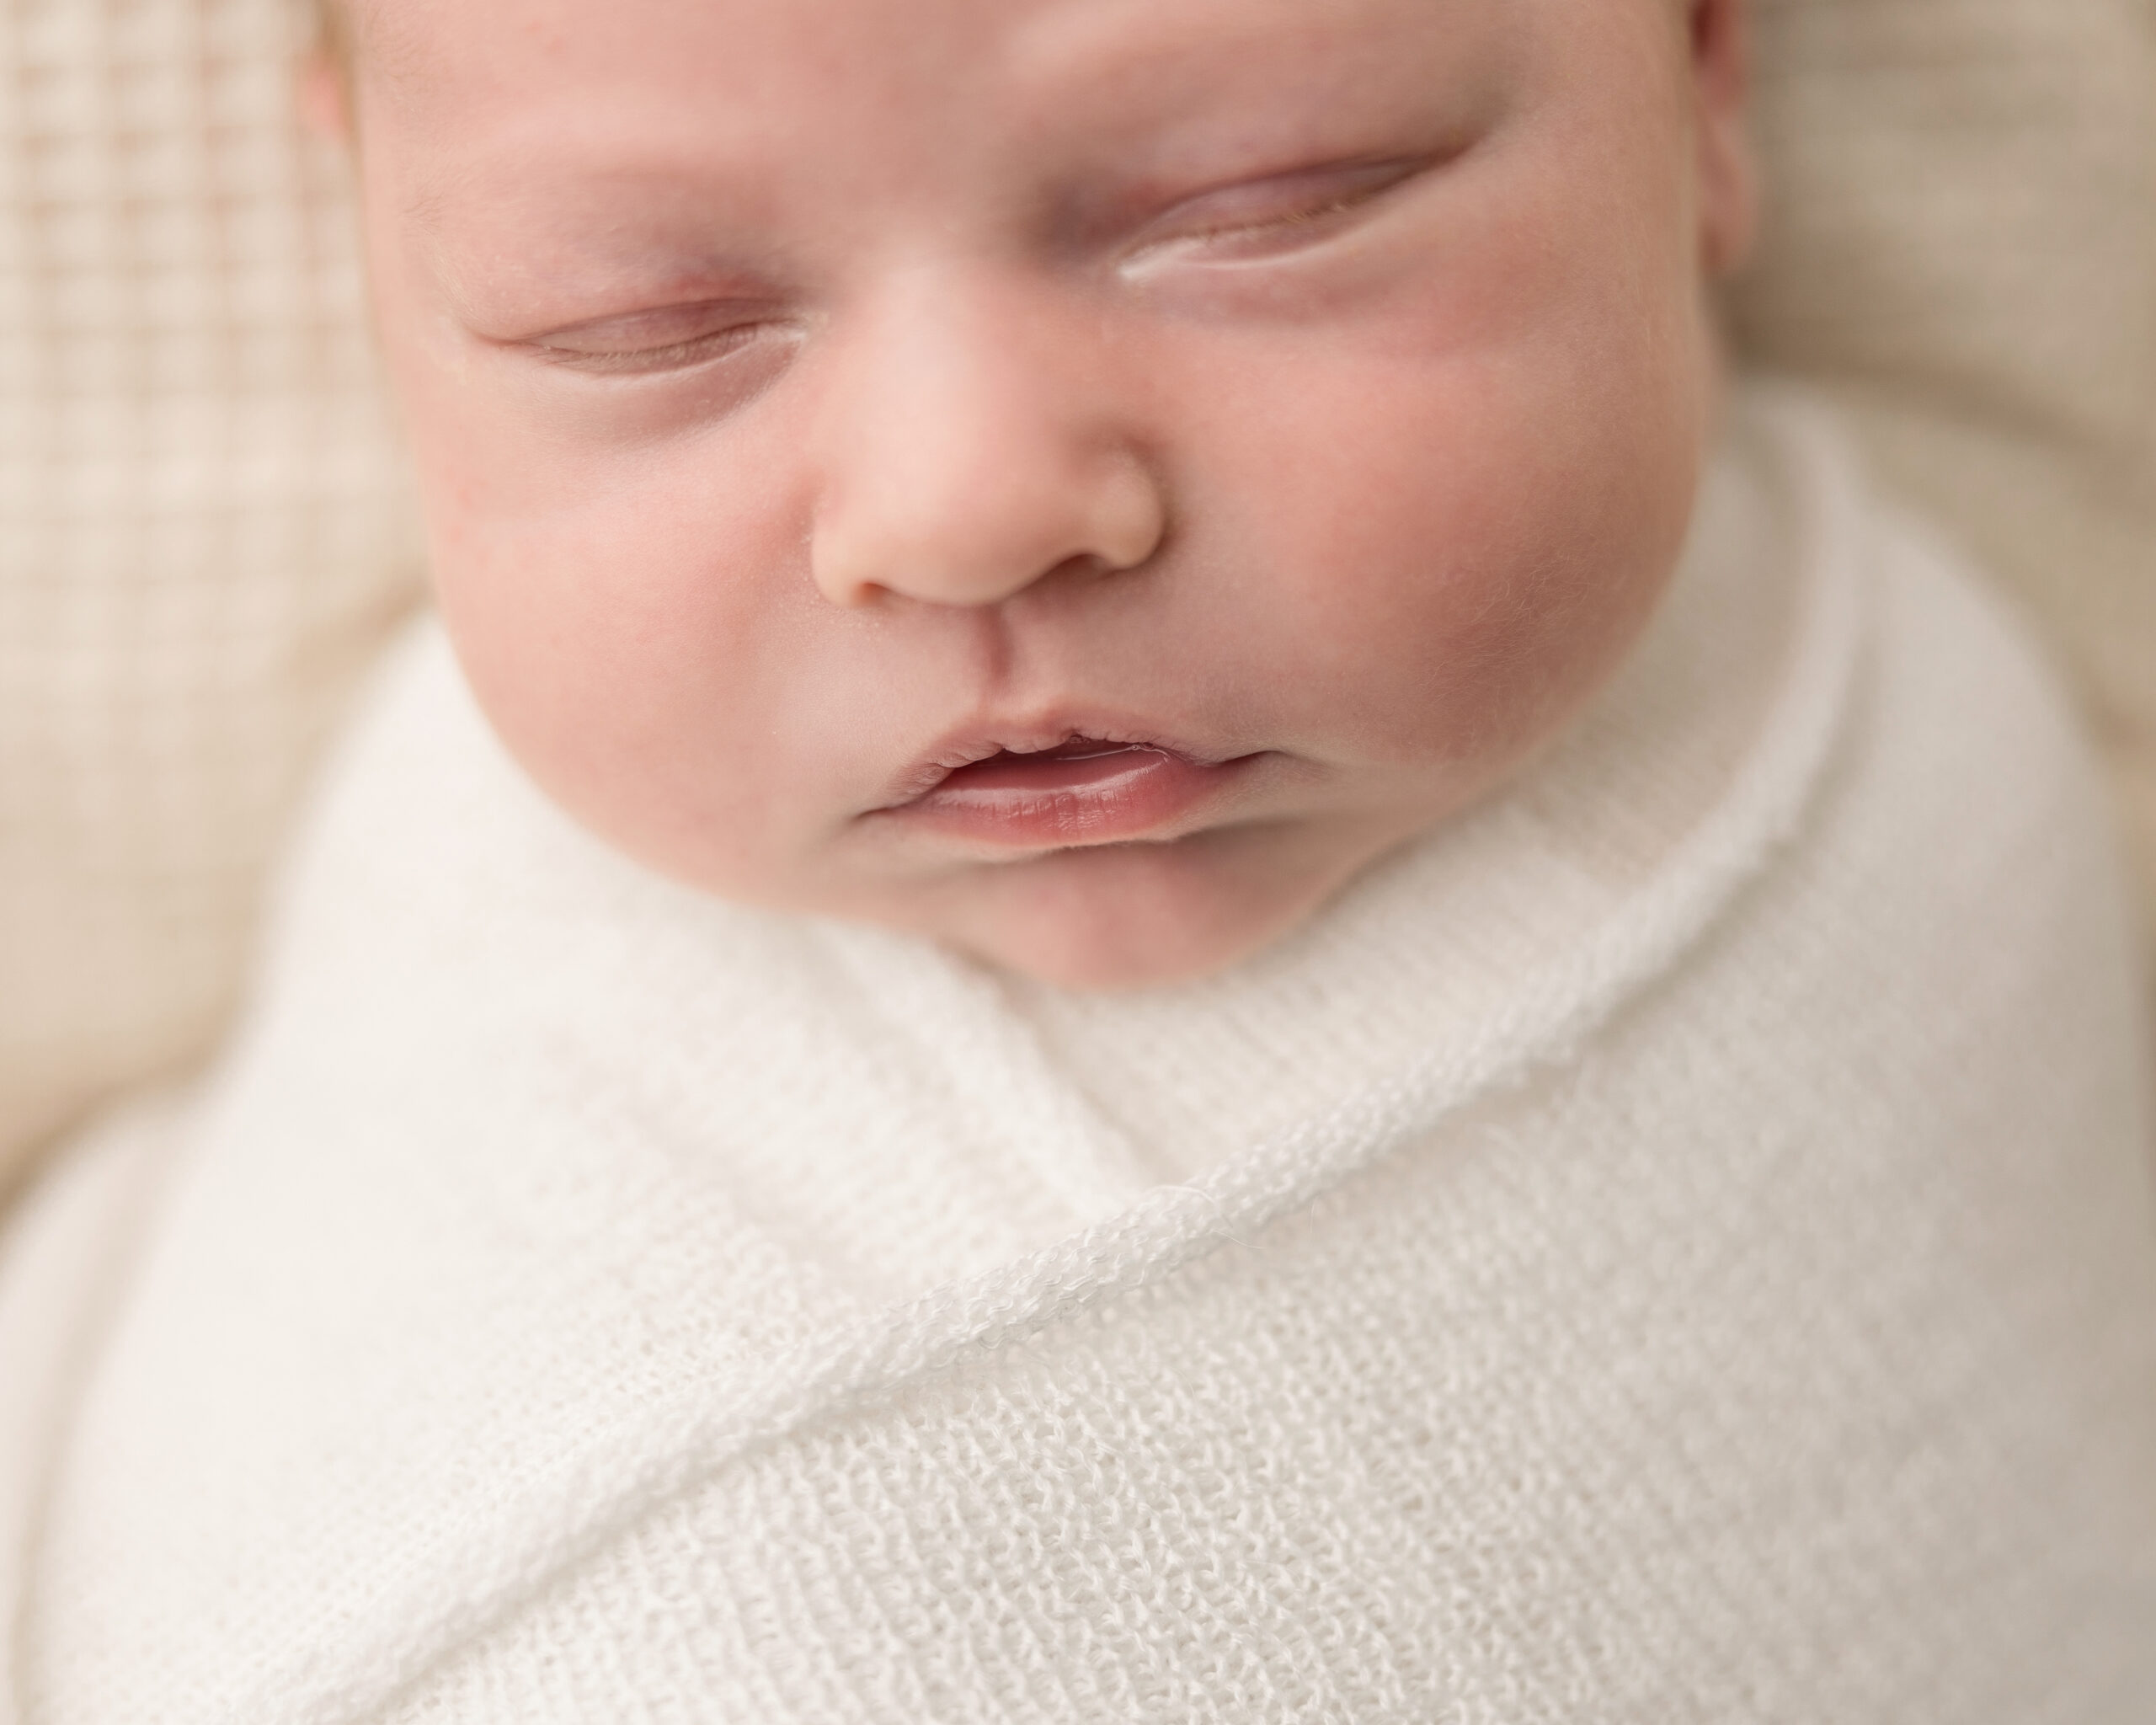 facial details of a newborn baby